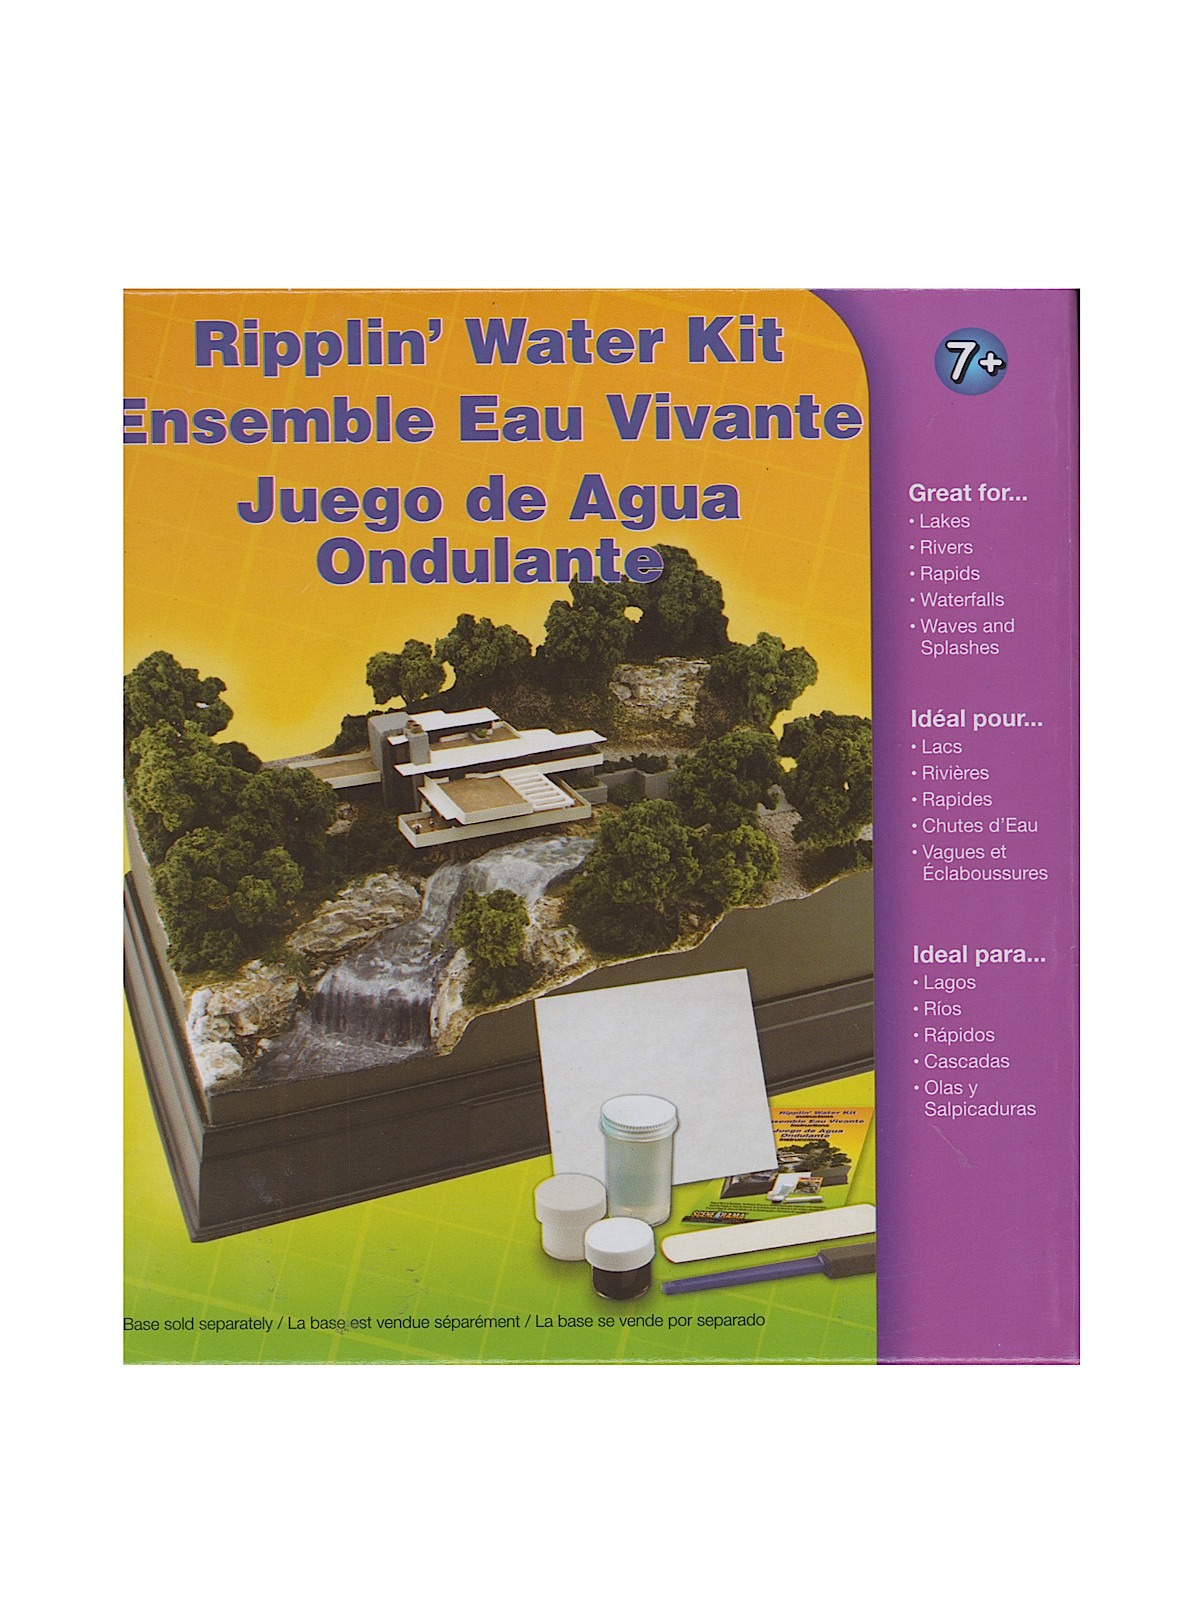 Rippling Water Kit Each